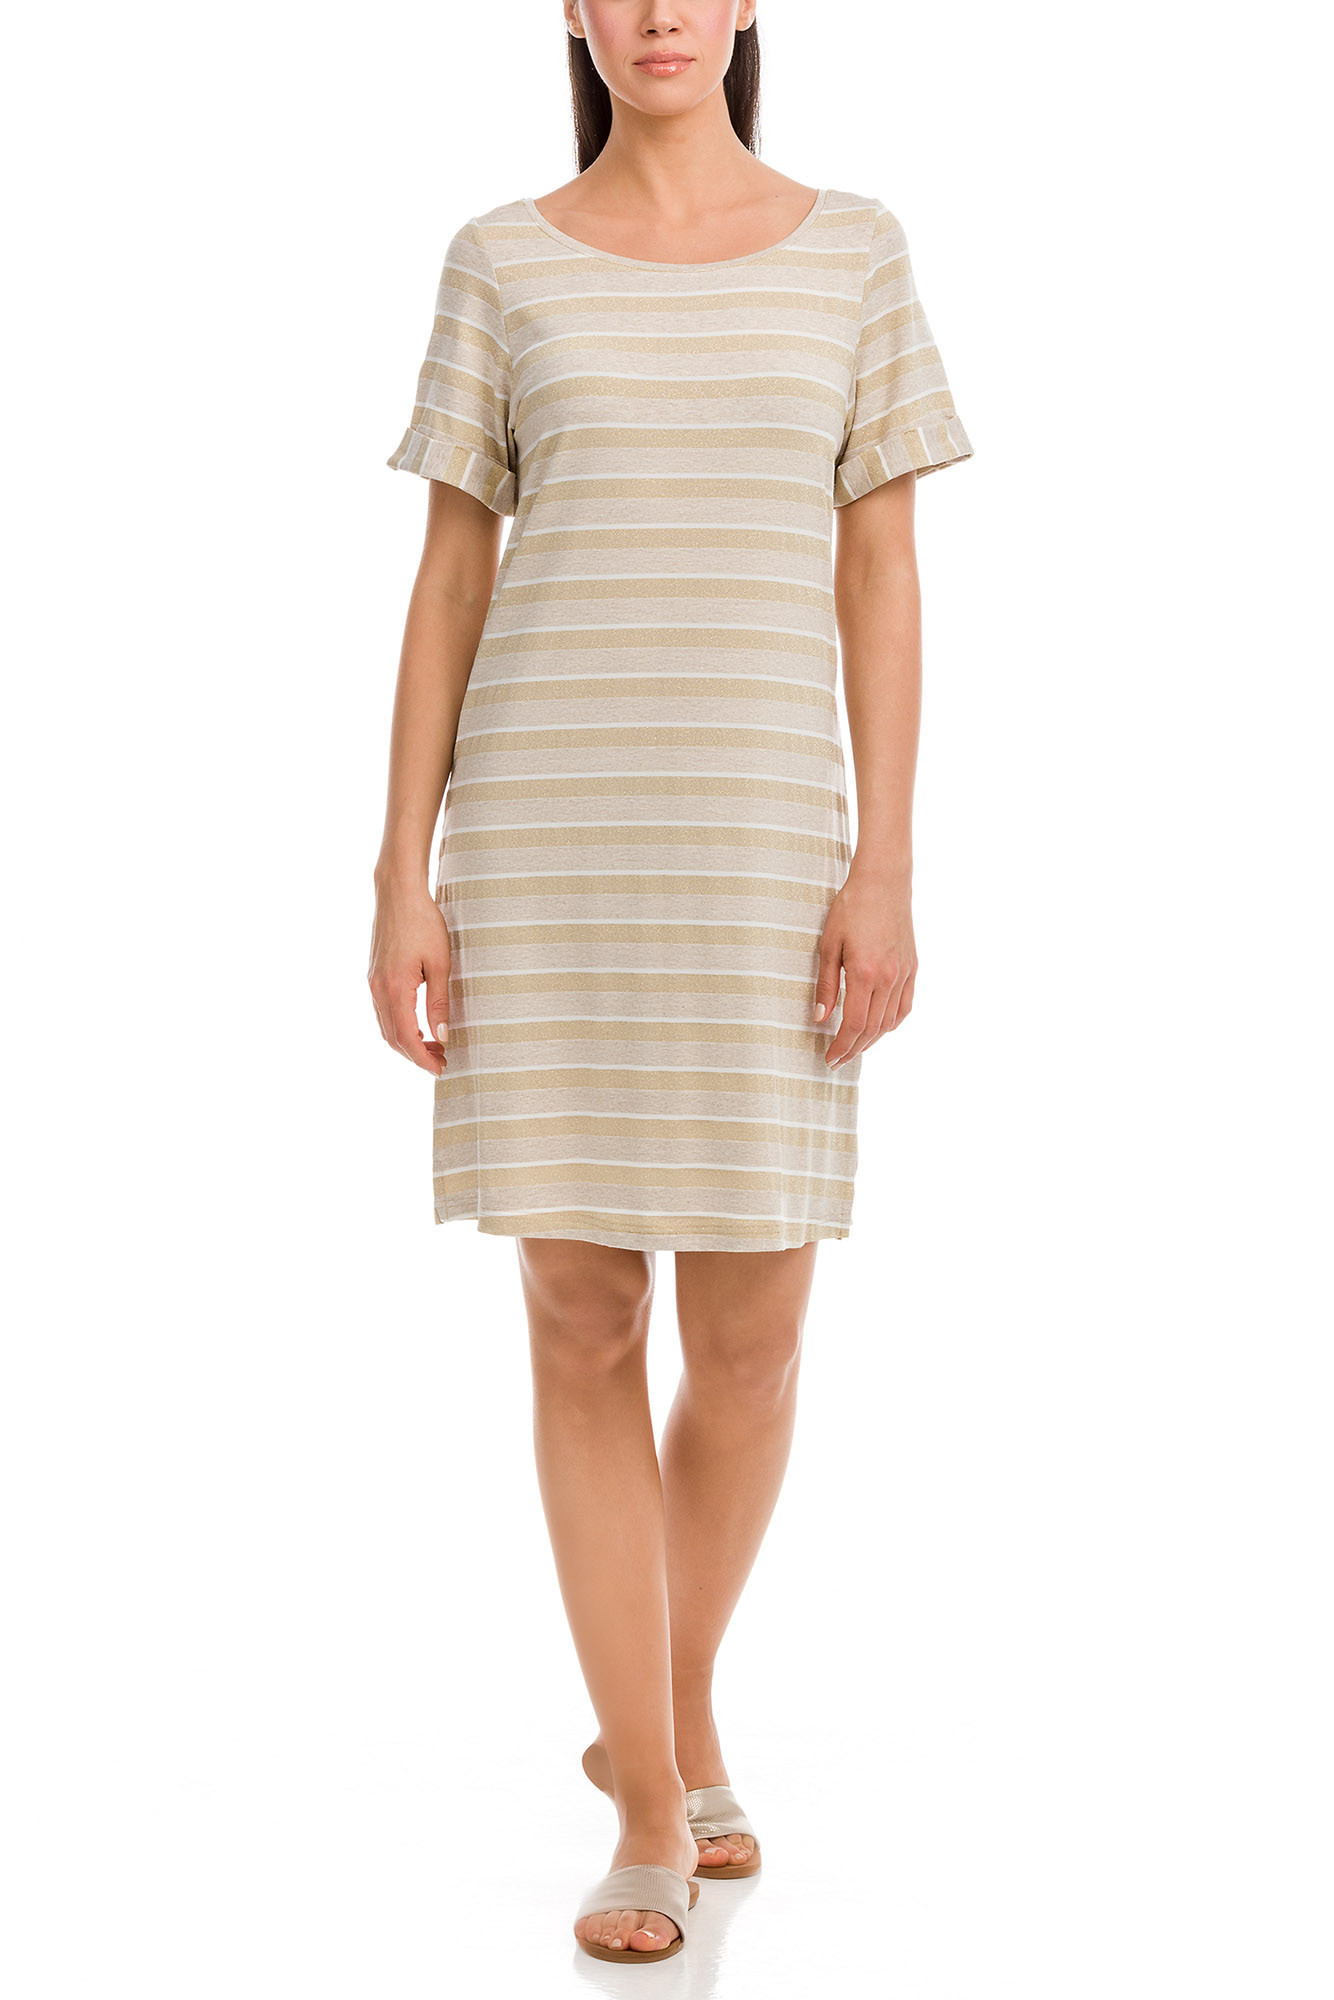 Vamp - Dámské šaty 12557 - Vamp beige melange XL